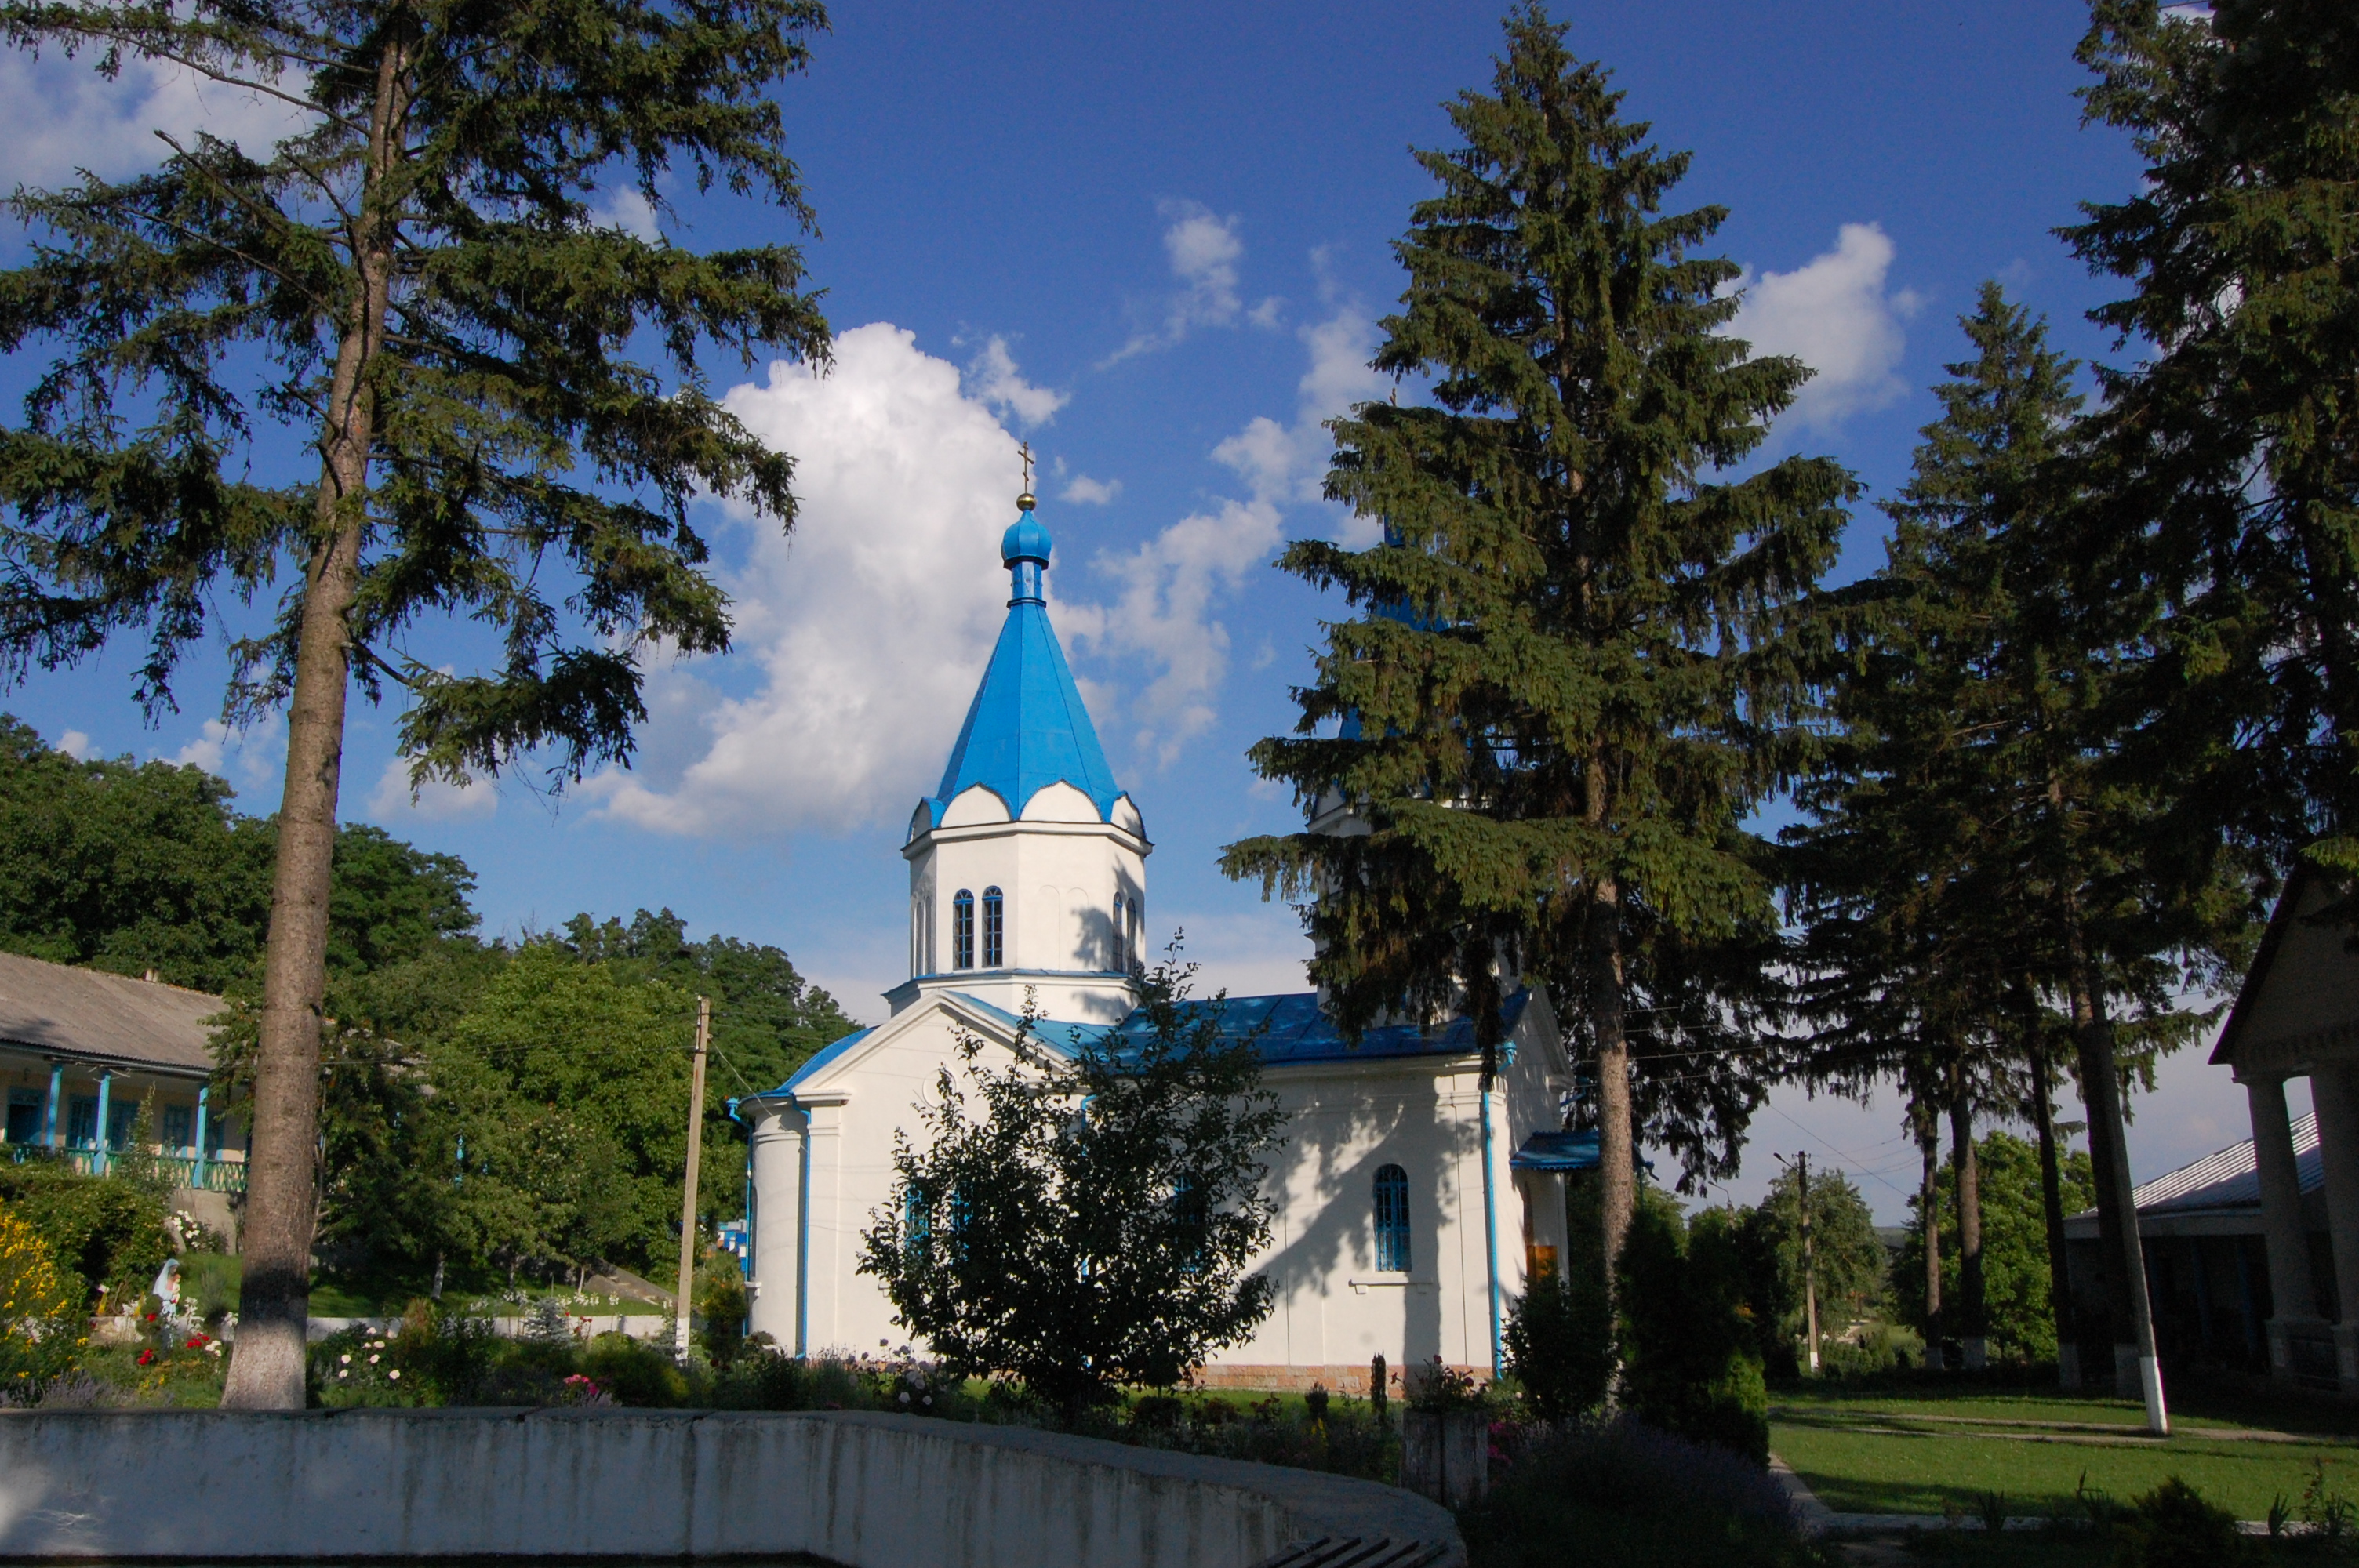 MD, Район Straseni, Satul Tiganesti, Manastirea Tiganesti, Biserica in care se petrec slujbi